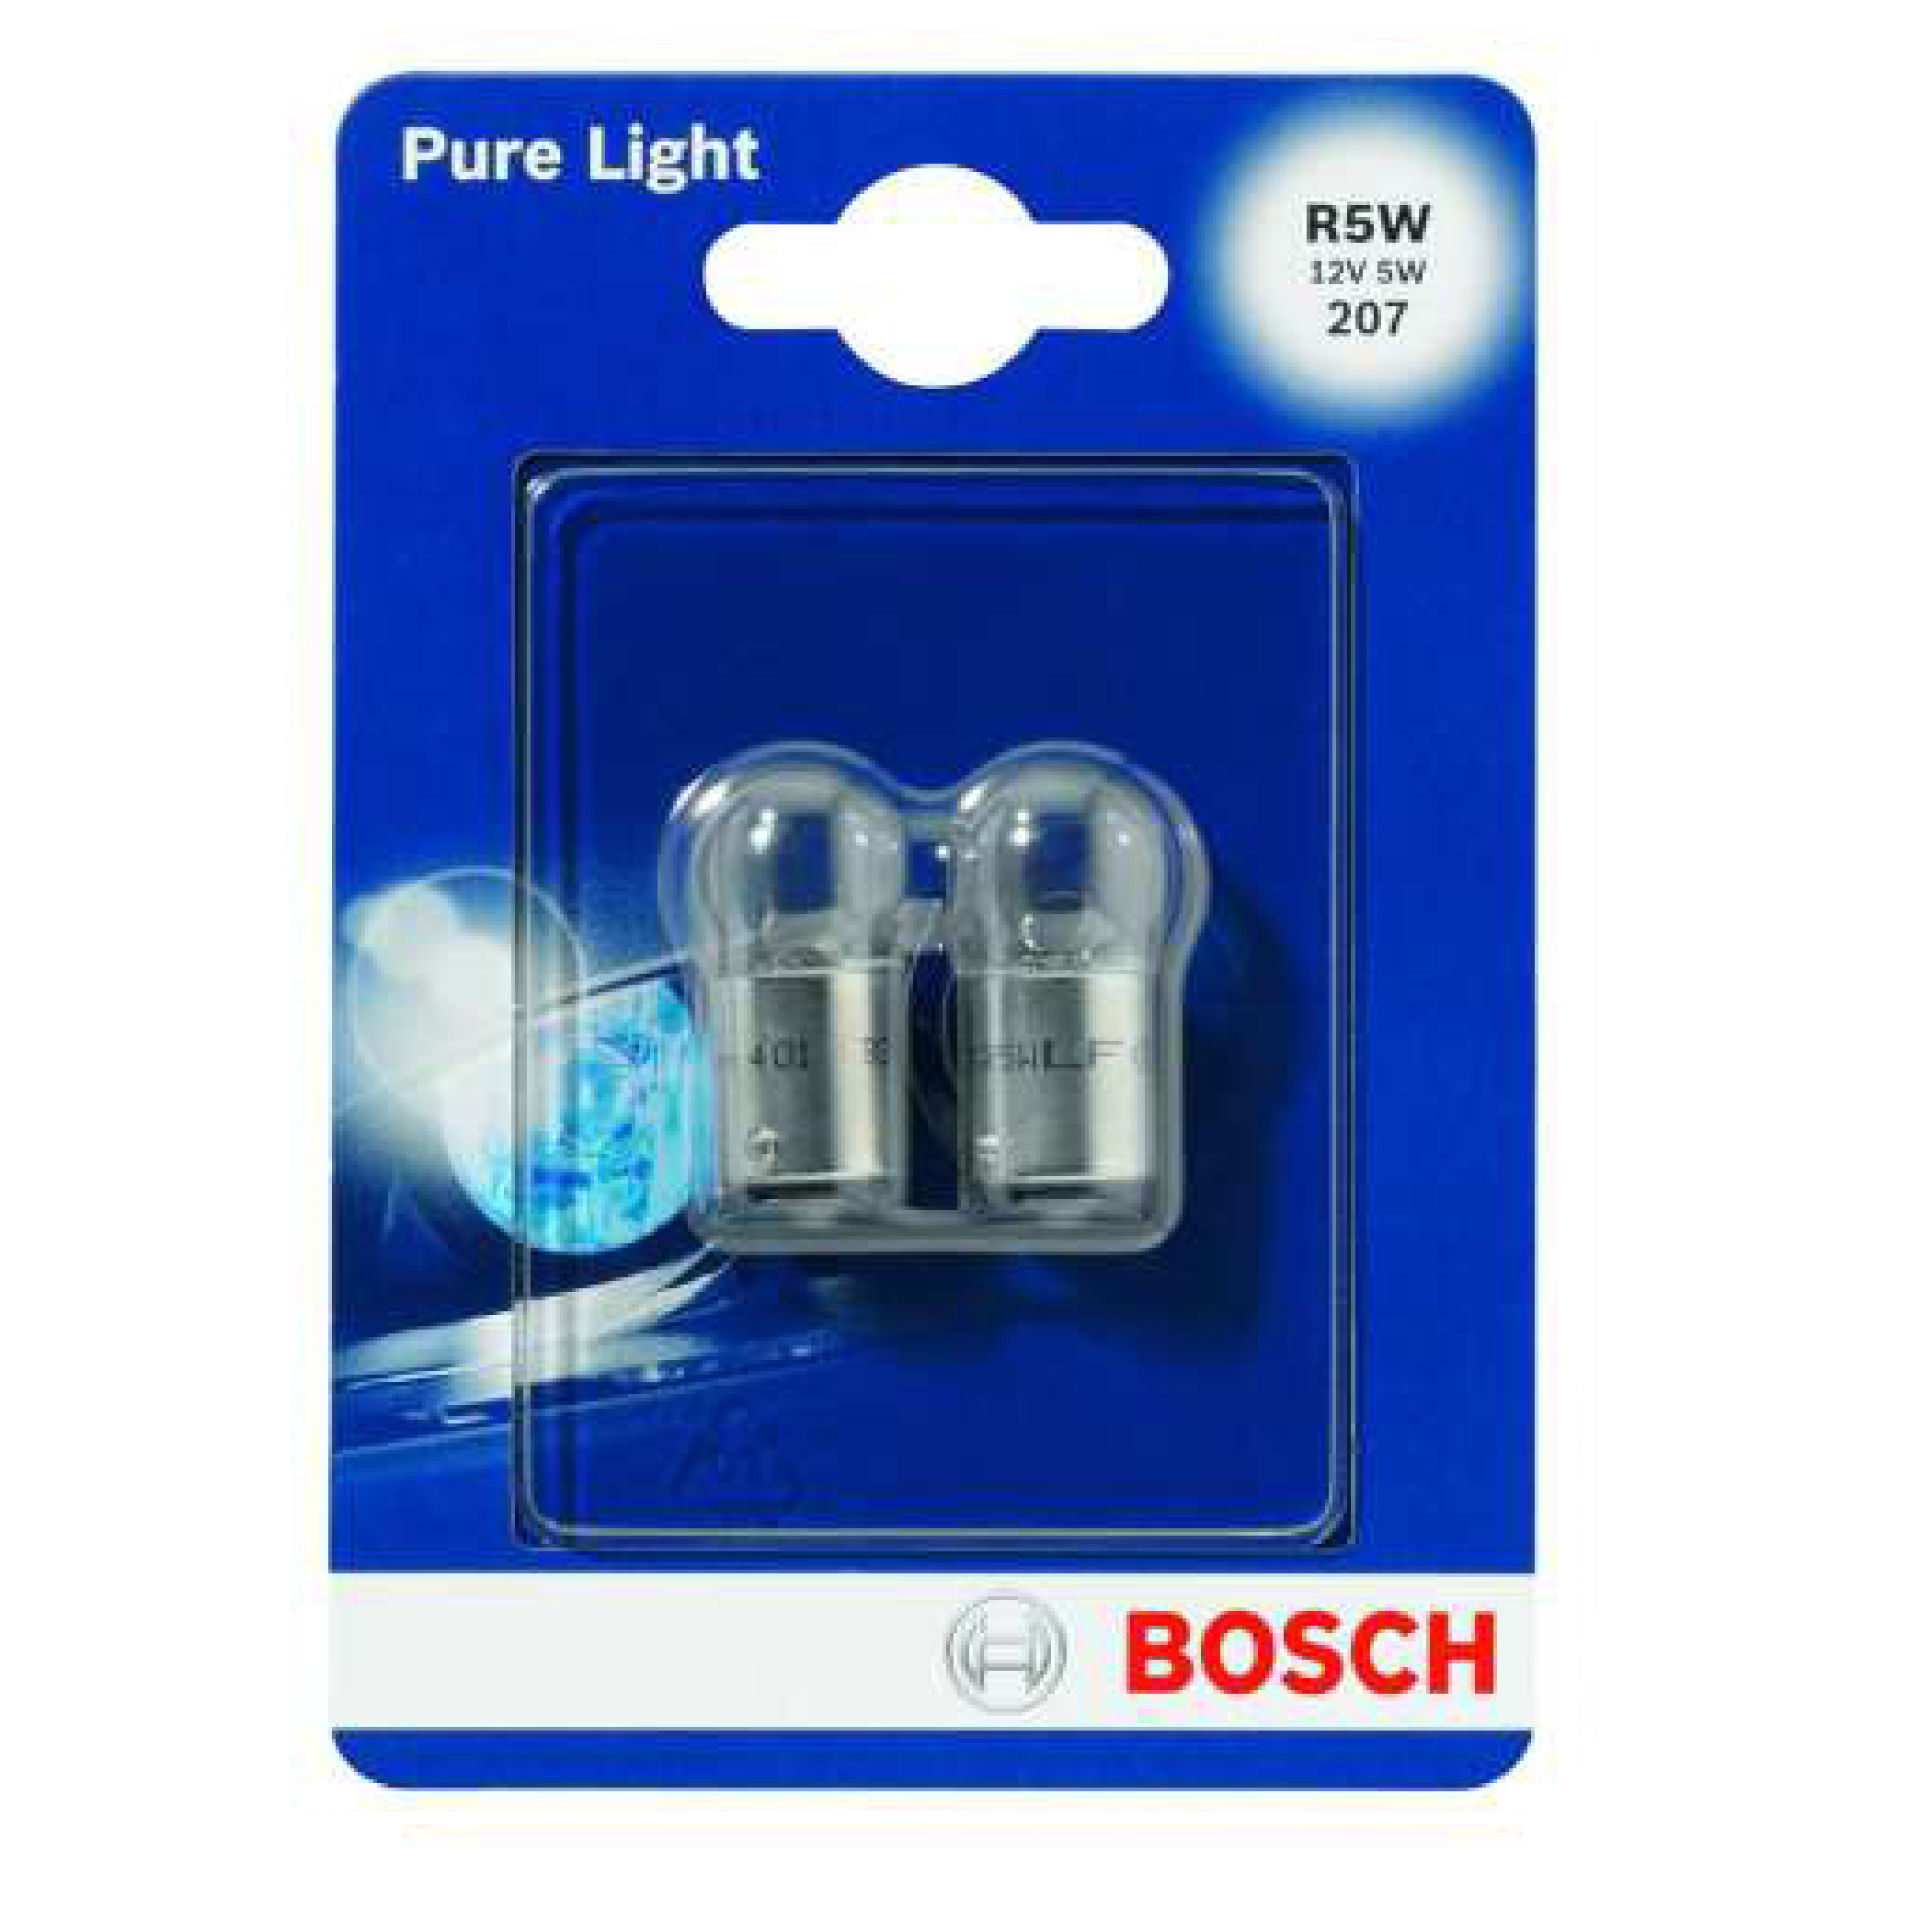 BOSCH 2 LAMP R5W 022Bosch